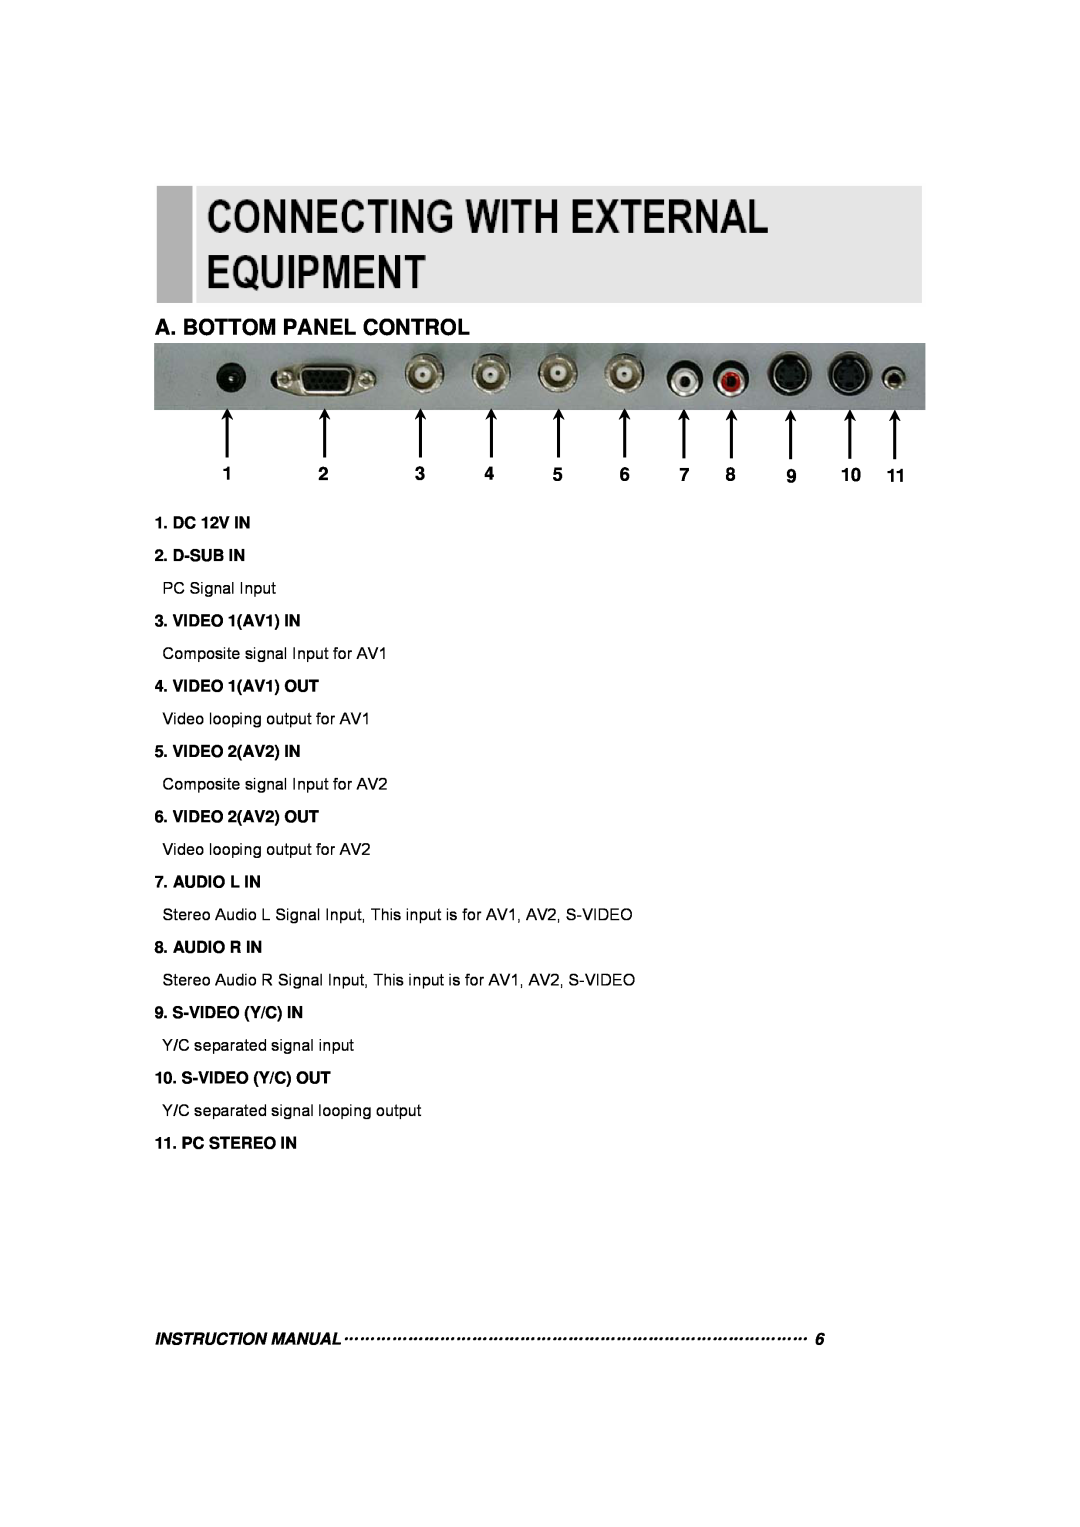 TOA Electronics 15RTV instruction manual A. Bottom Panel Control, Instruction Manual…………………………………………………………………………… 